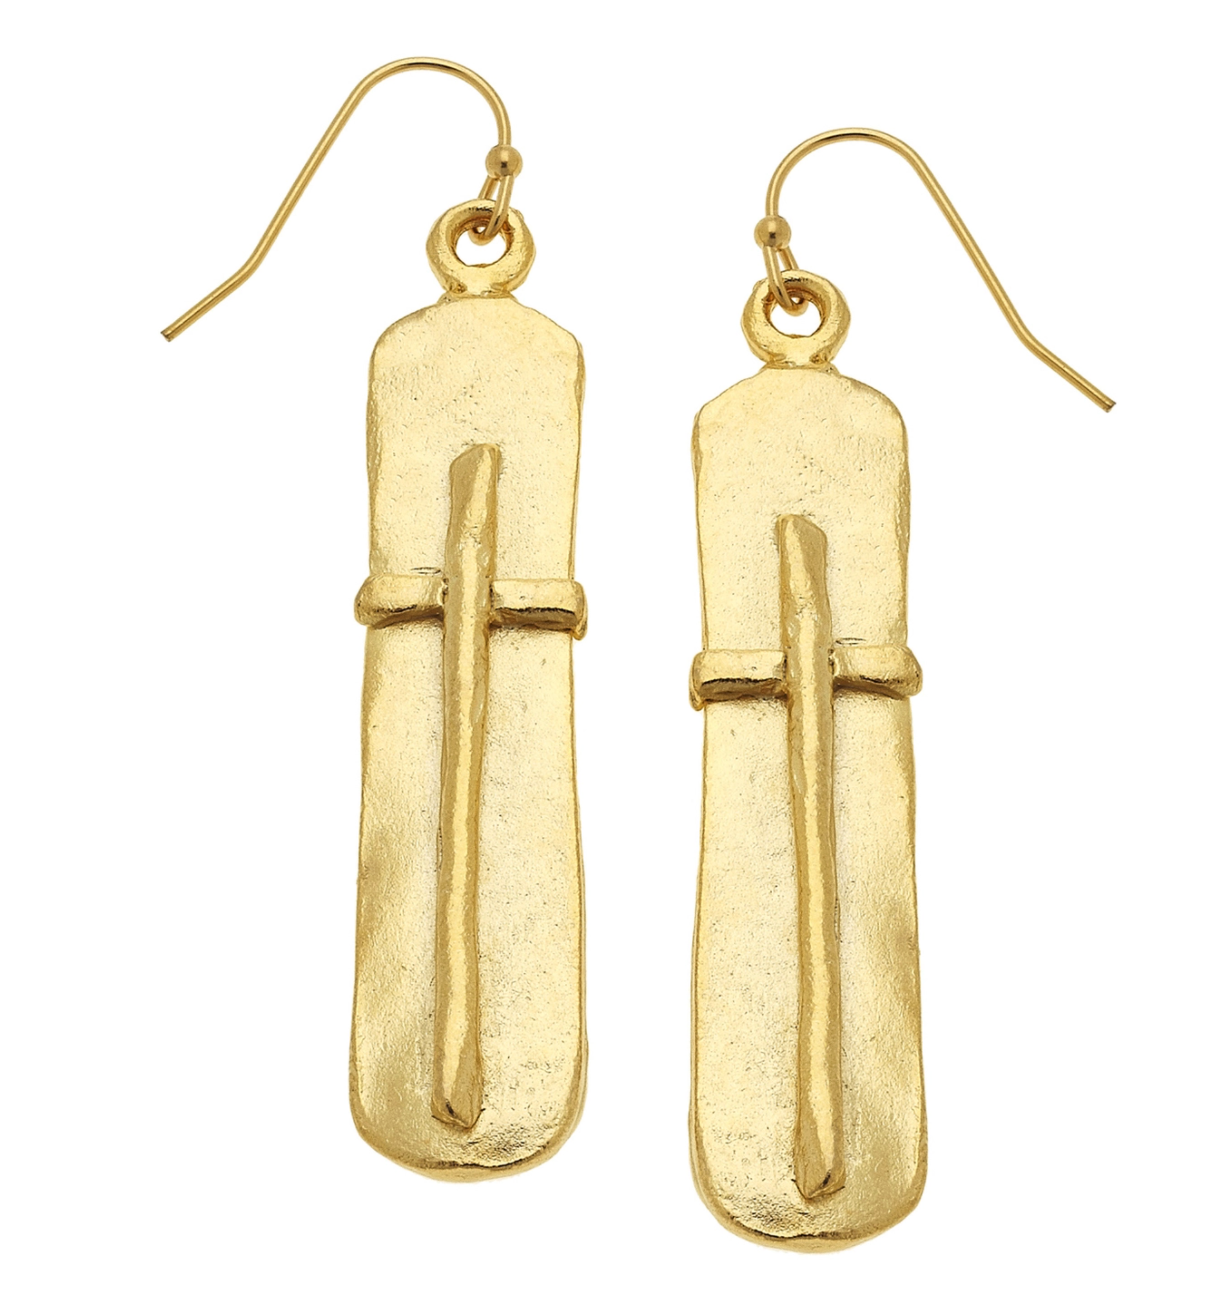 Gold Bar with Cross Earrings